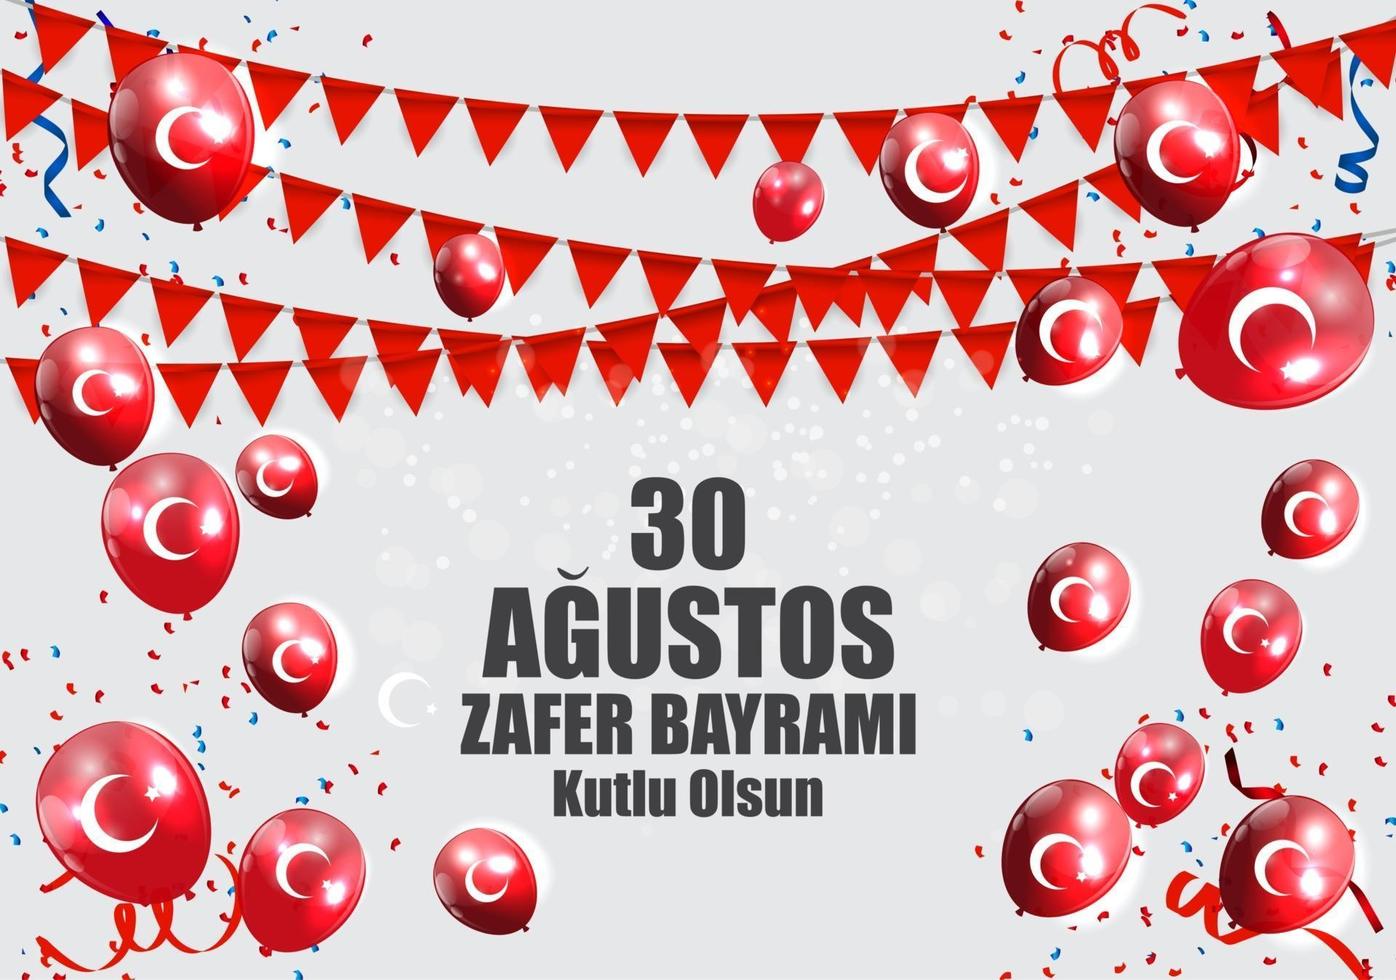 30 augusti, segerdagen turkiska talar agustos, zafer bayrami kutlu olsun. vektor illustration